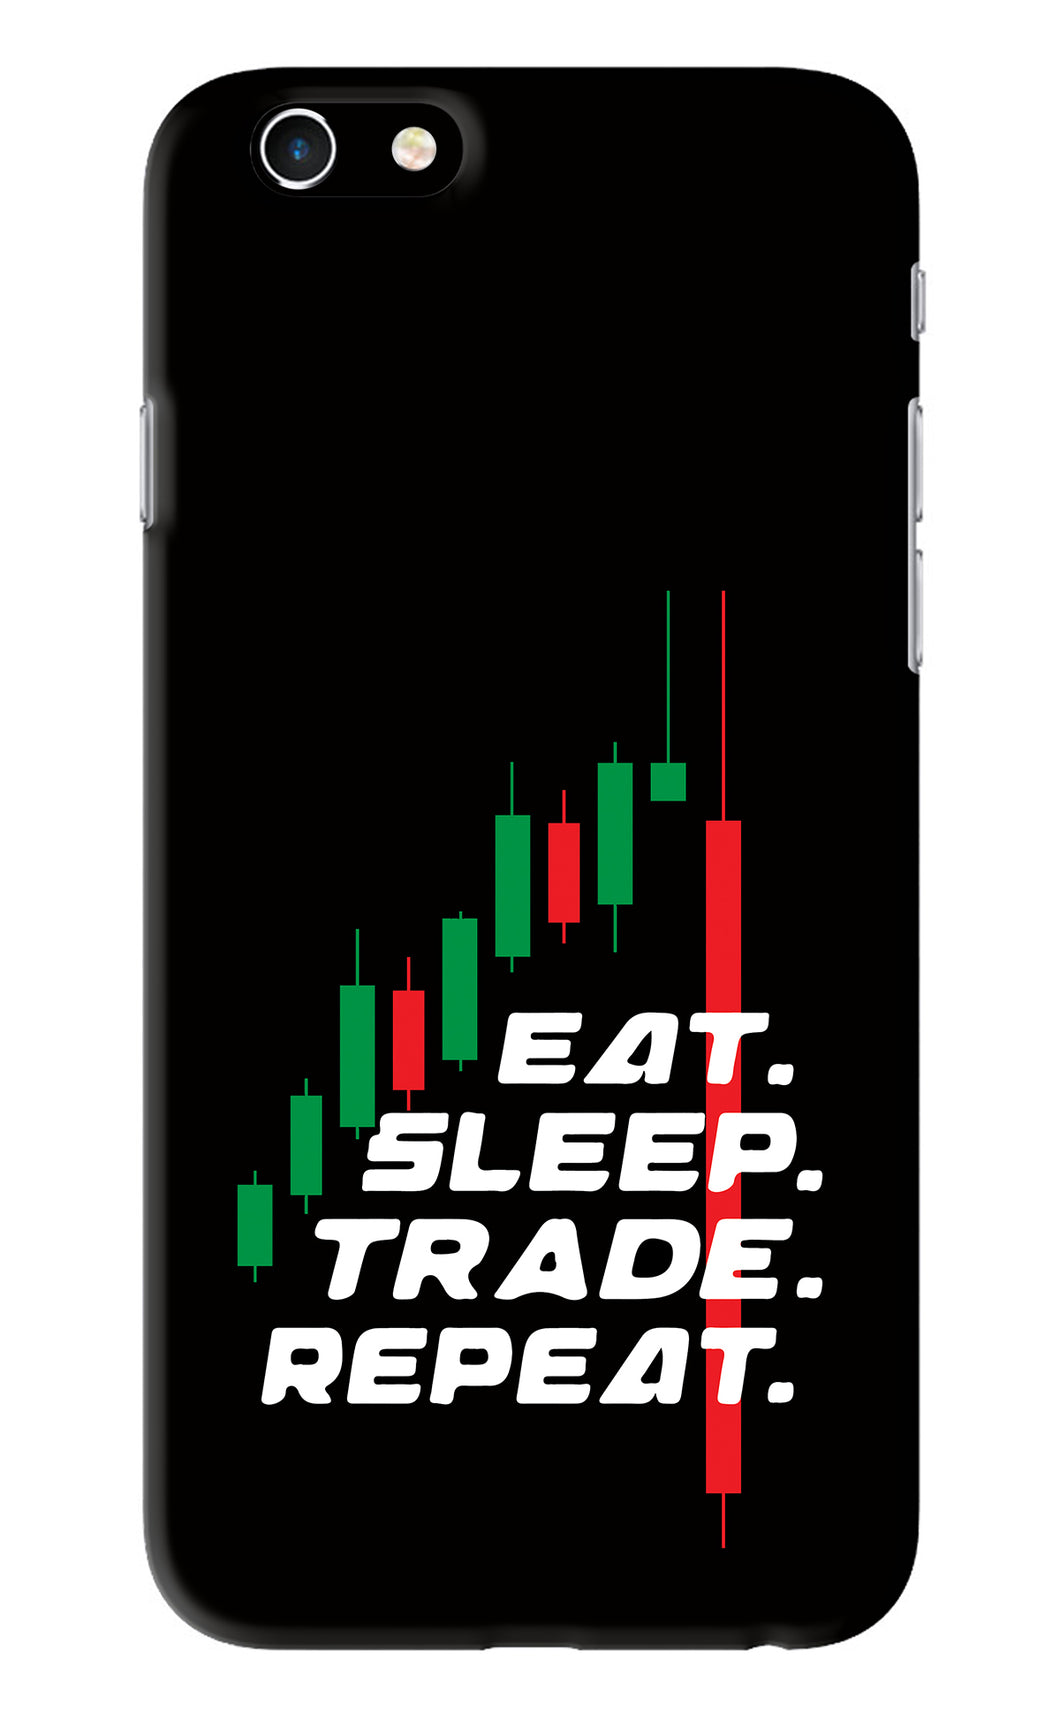 Eat Sleep Trade Repeat iPhone 6 Back Skin Wrap